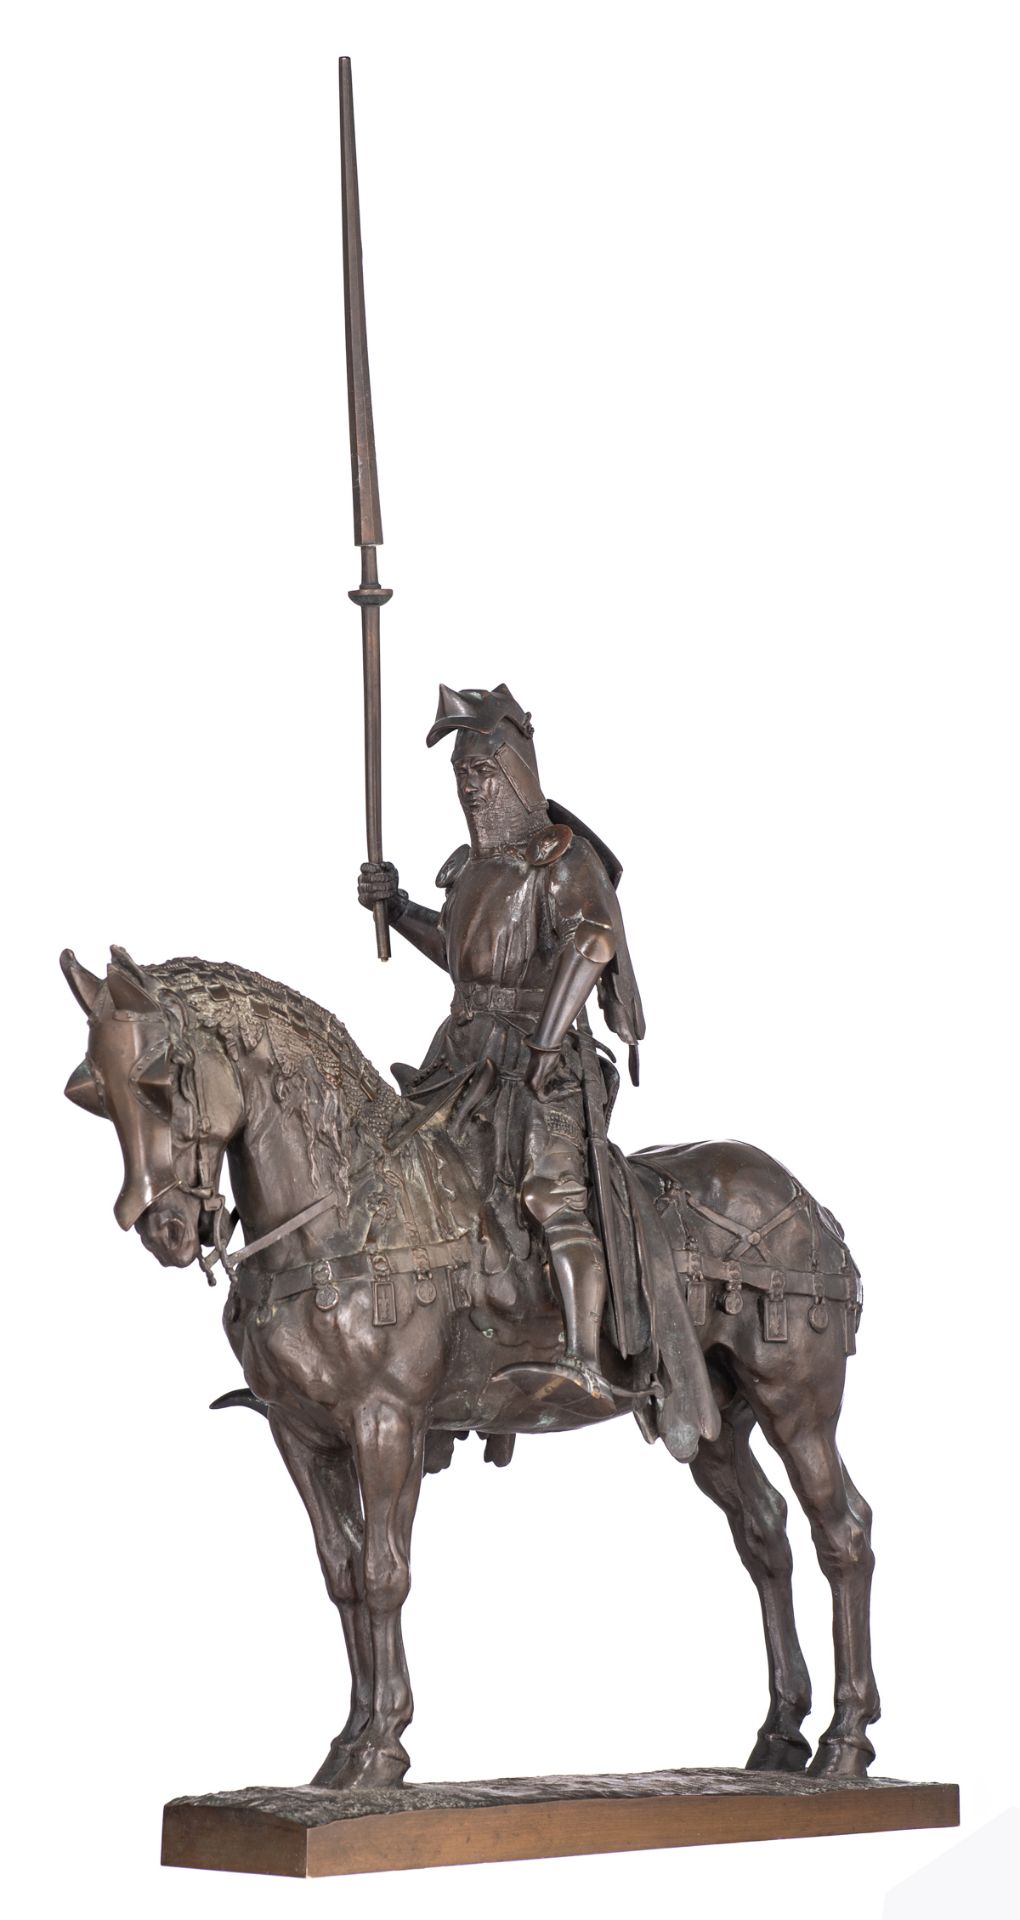 Fremiet C., a knight on horseback, patinated bronze, H 71,5 - W 40 cm